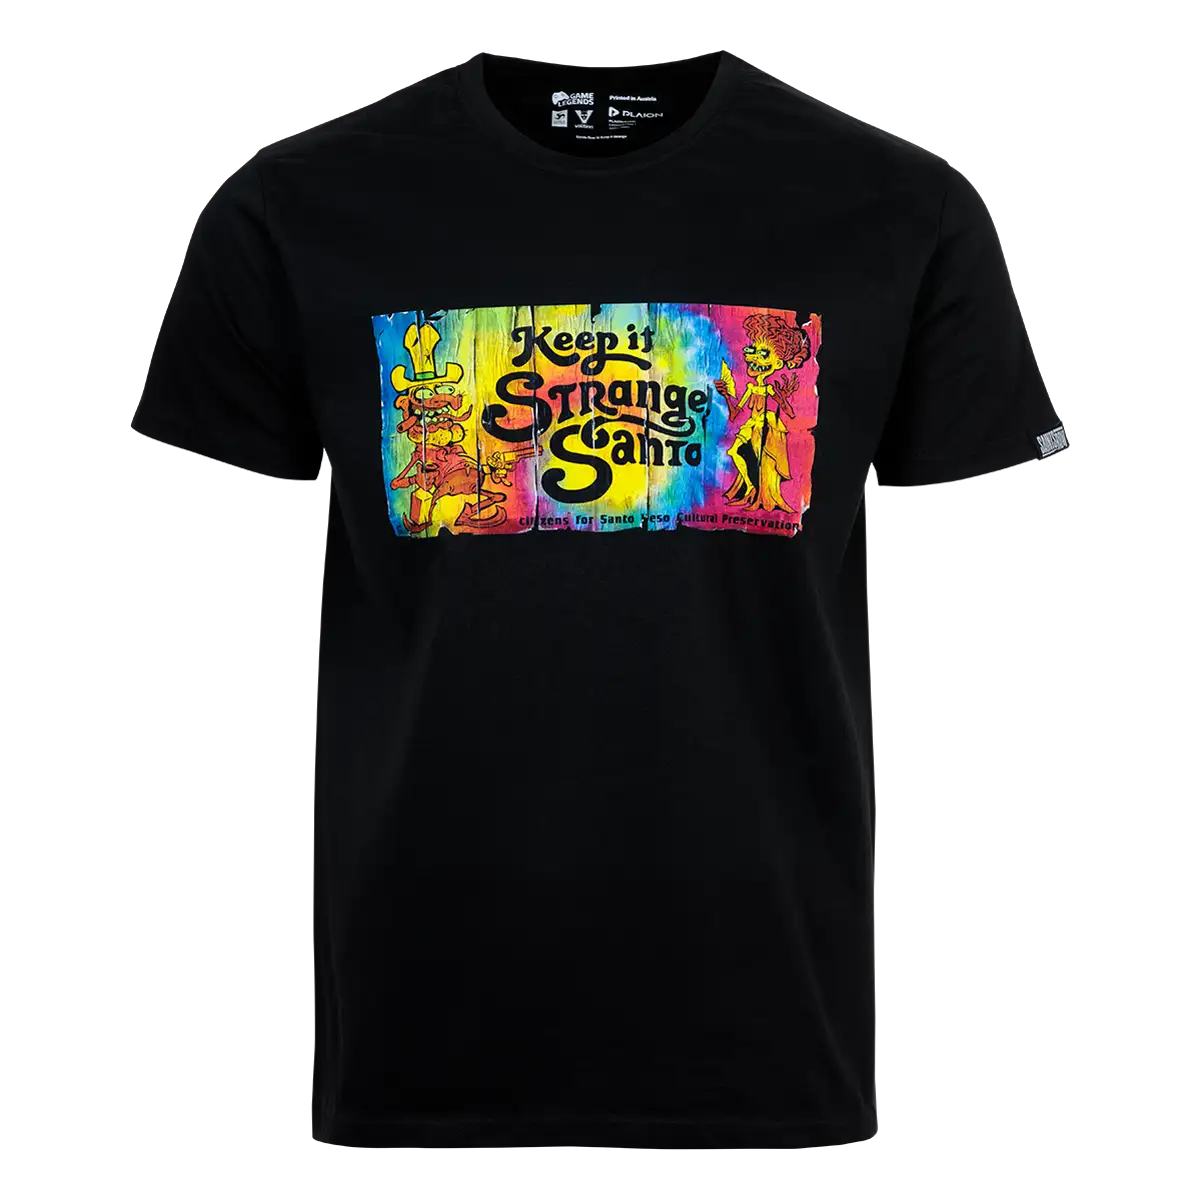 Saints Row T-Shirt "Keep it strange" Black Cover